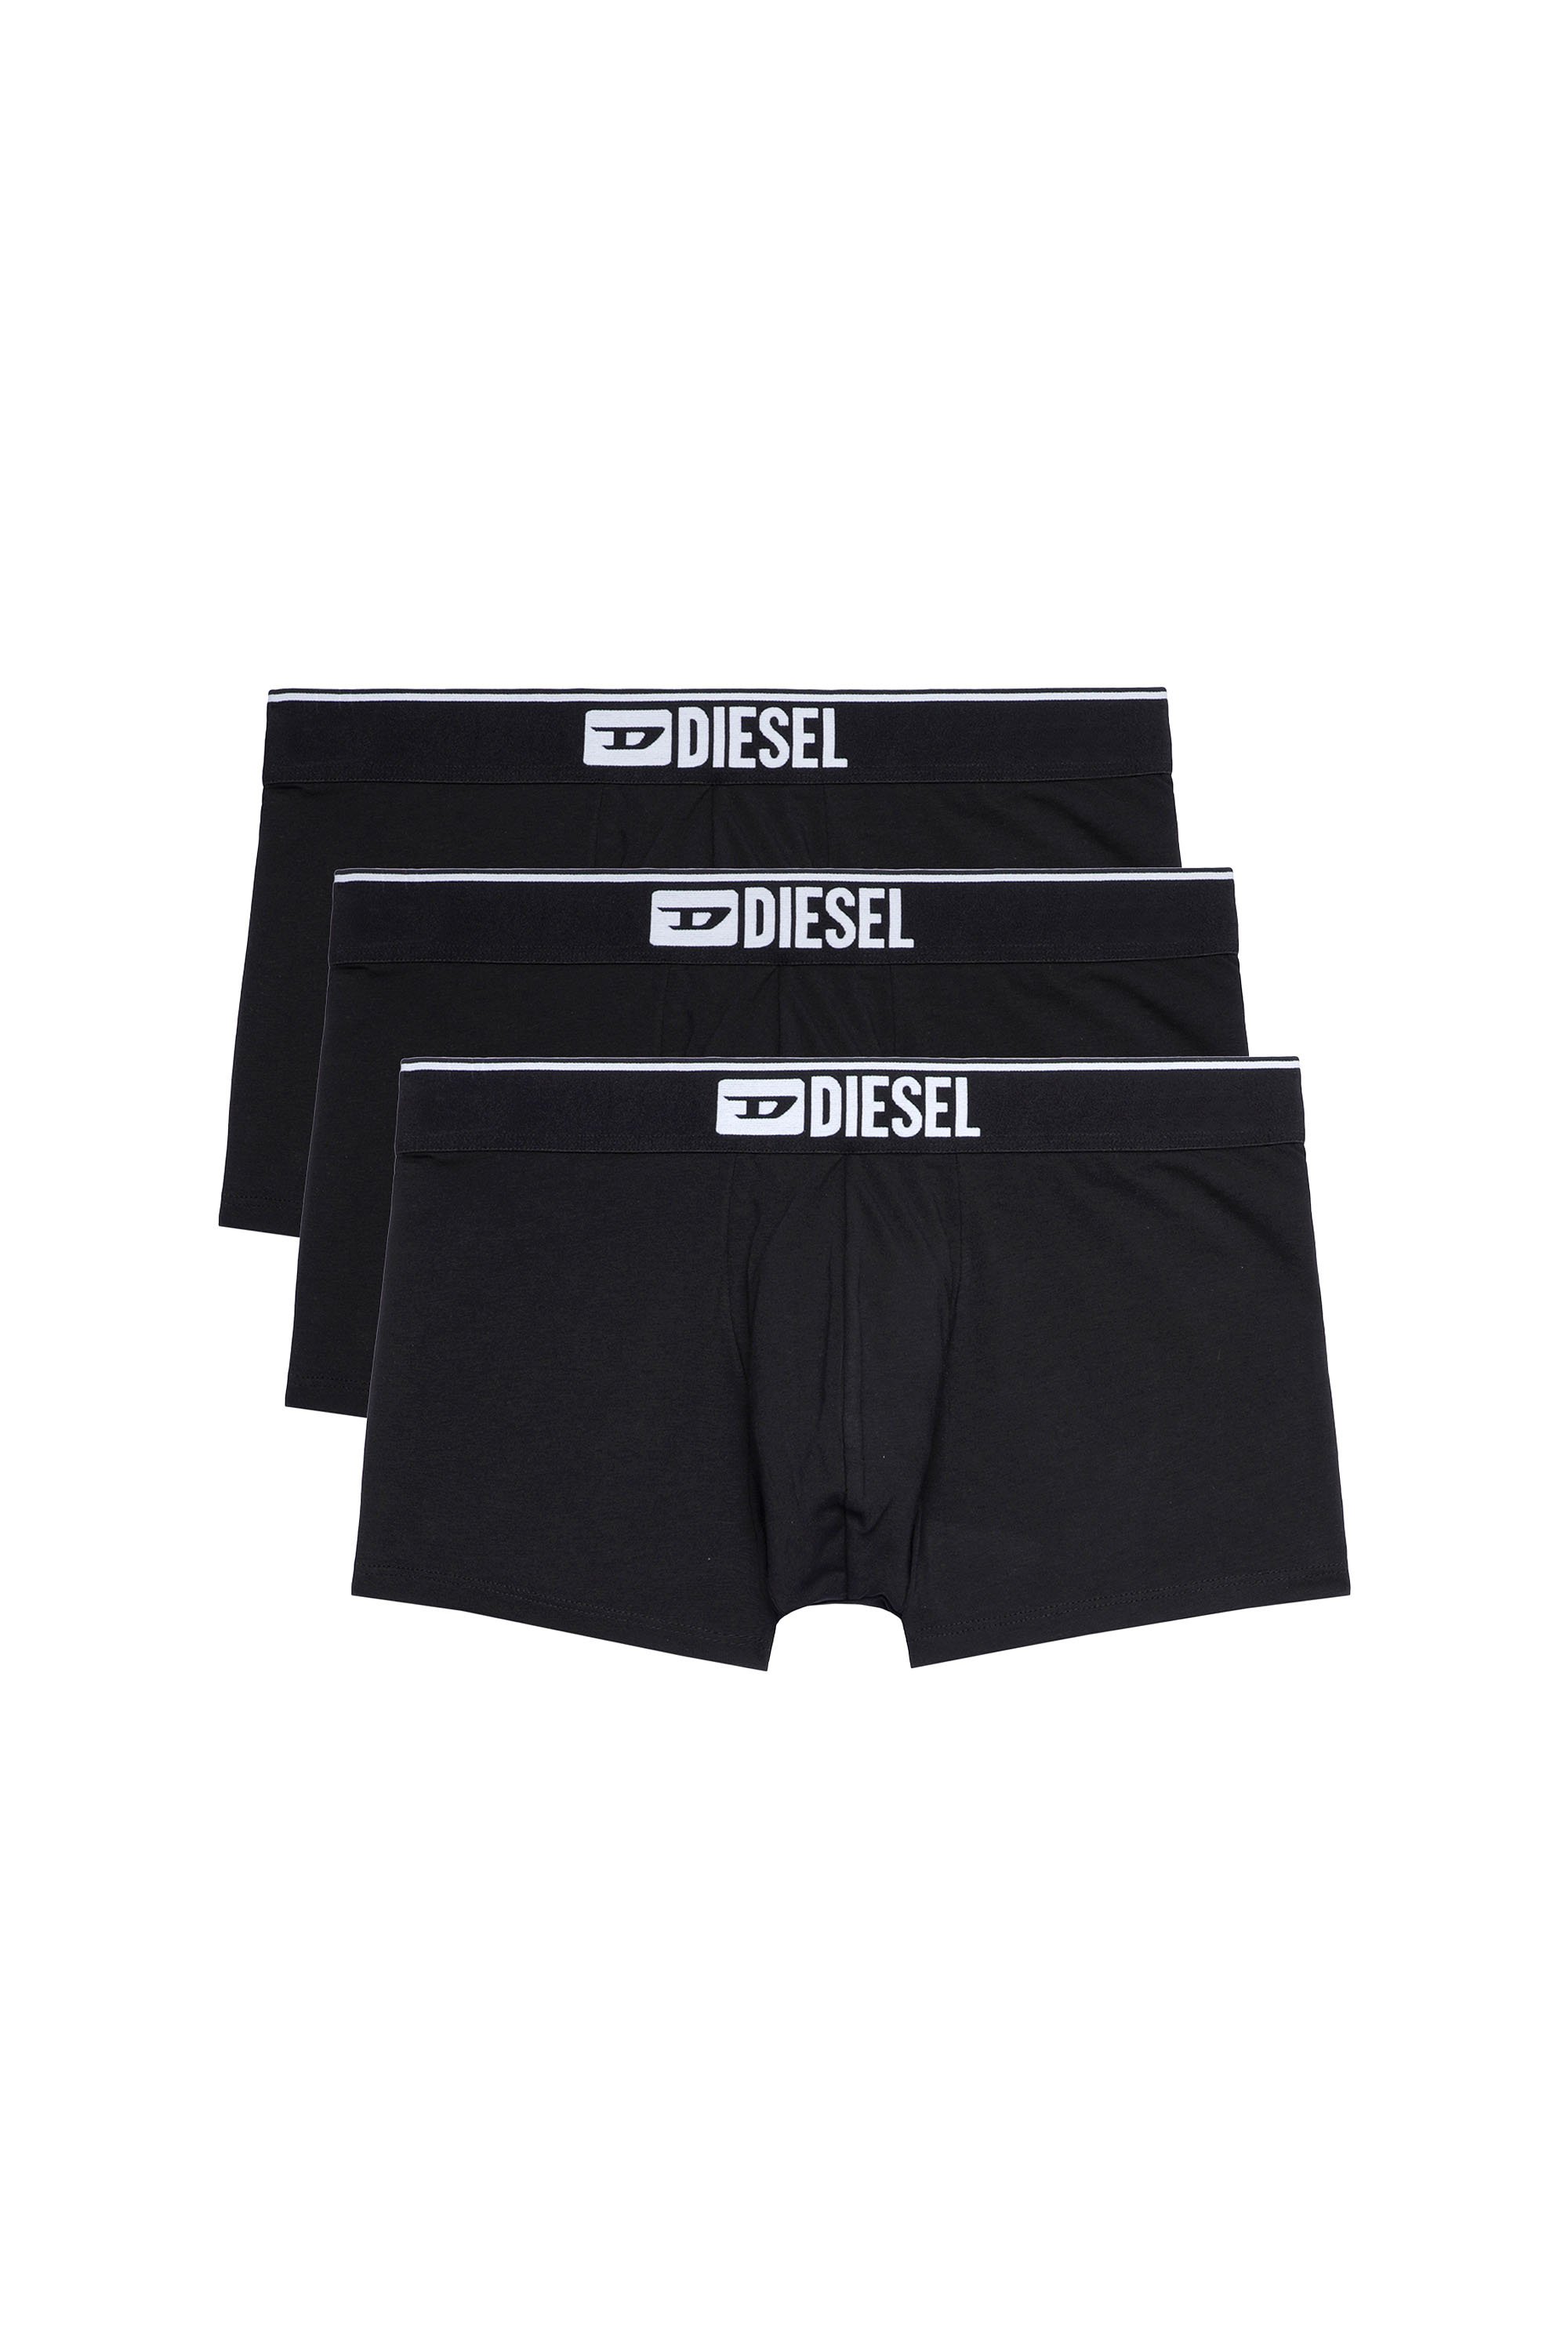 Diesel, Underwear & Socks, Diesel Underwear New